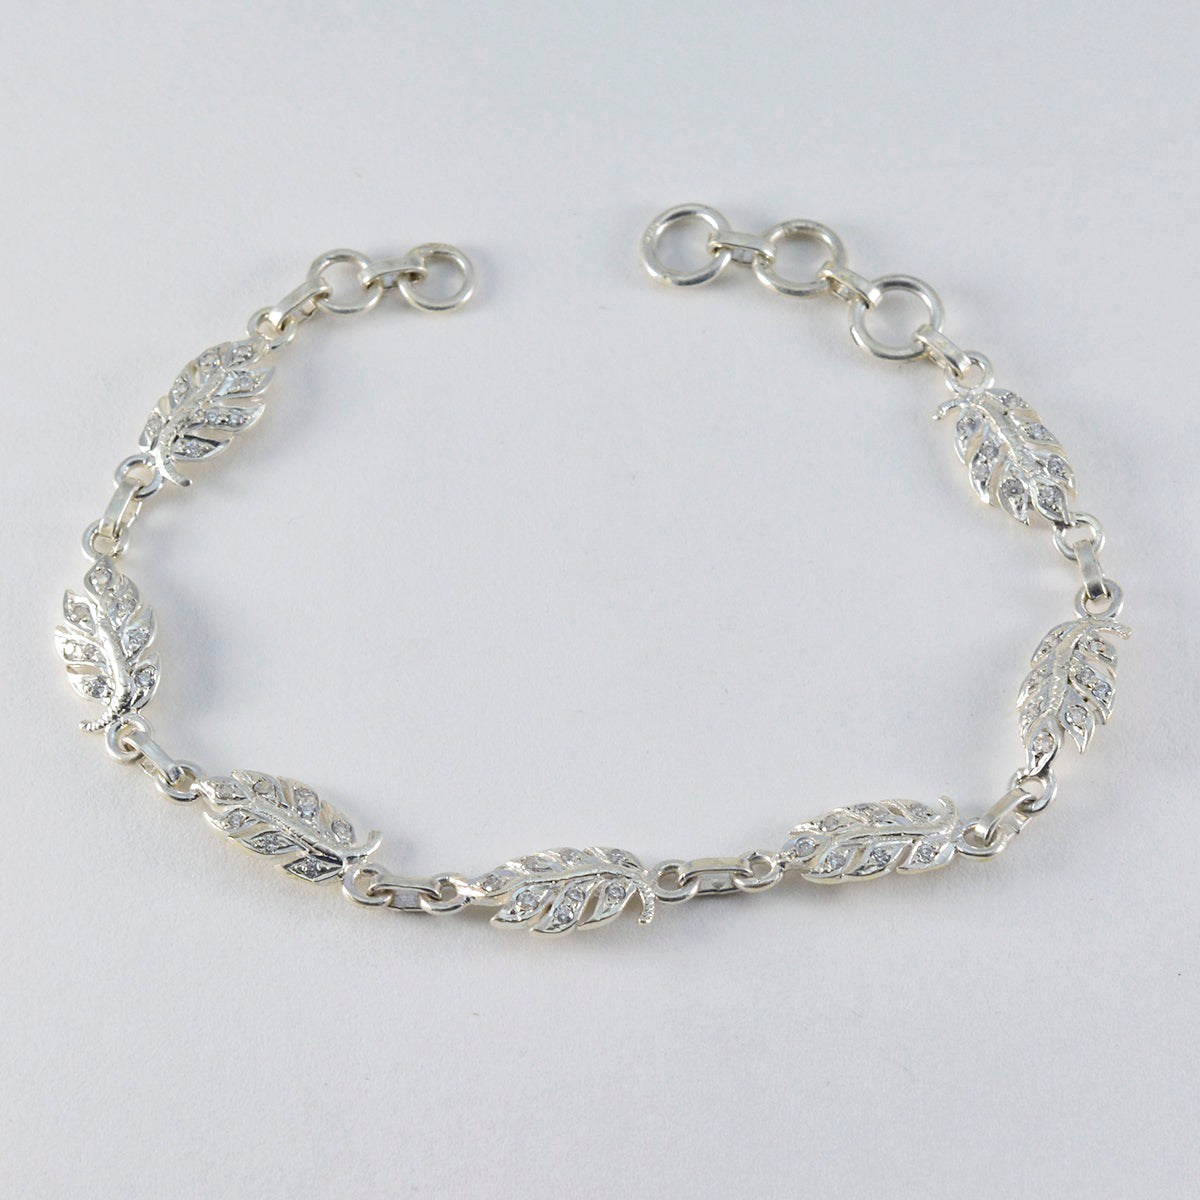 Riyo Attractive 925 Sterling Silver Bracelet For Girl White CZ Bracelet Bezel Setting Bracelet Bangle Bracelet L Size 6-8.5 Inch.